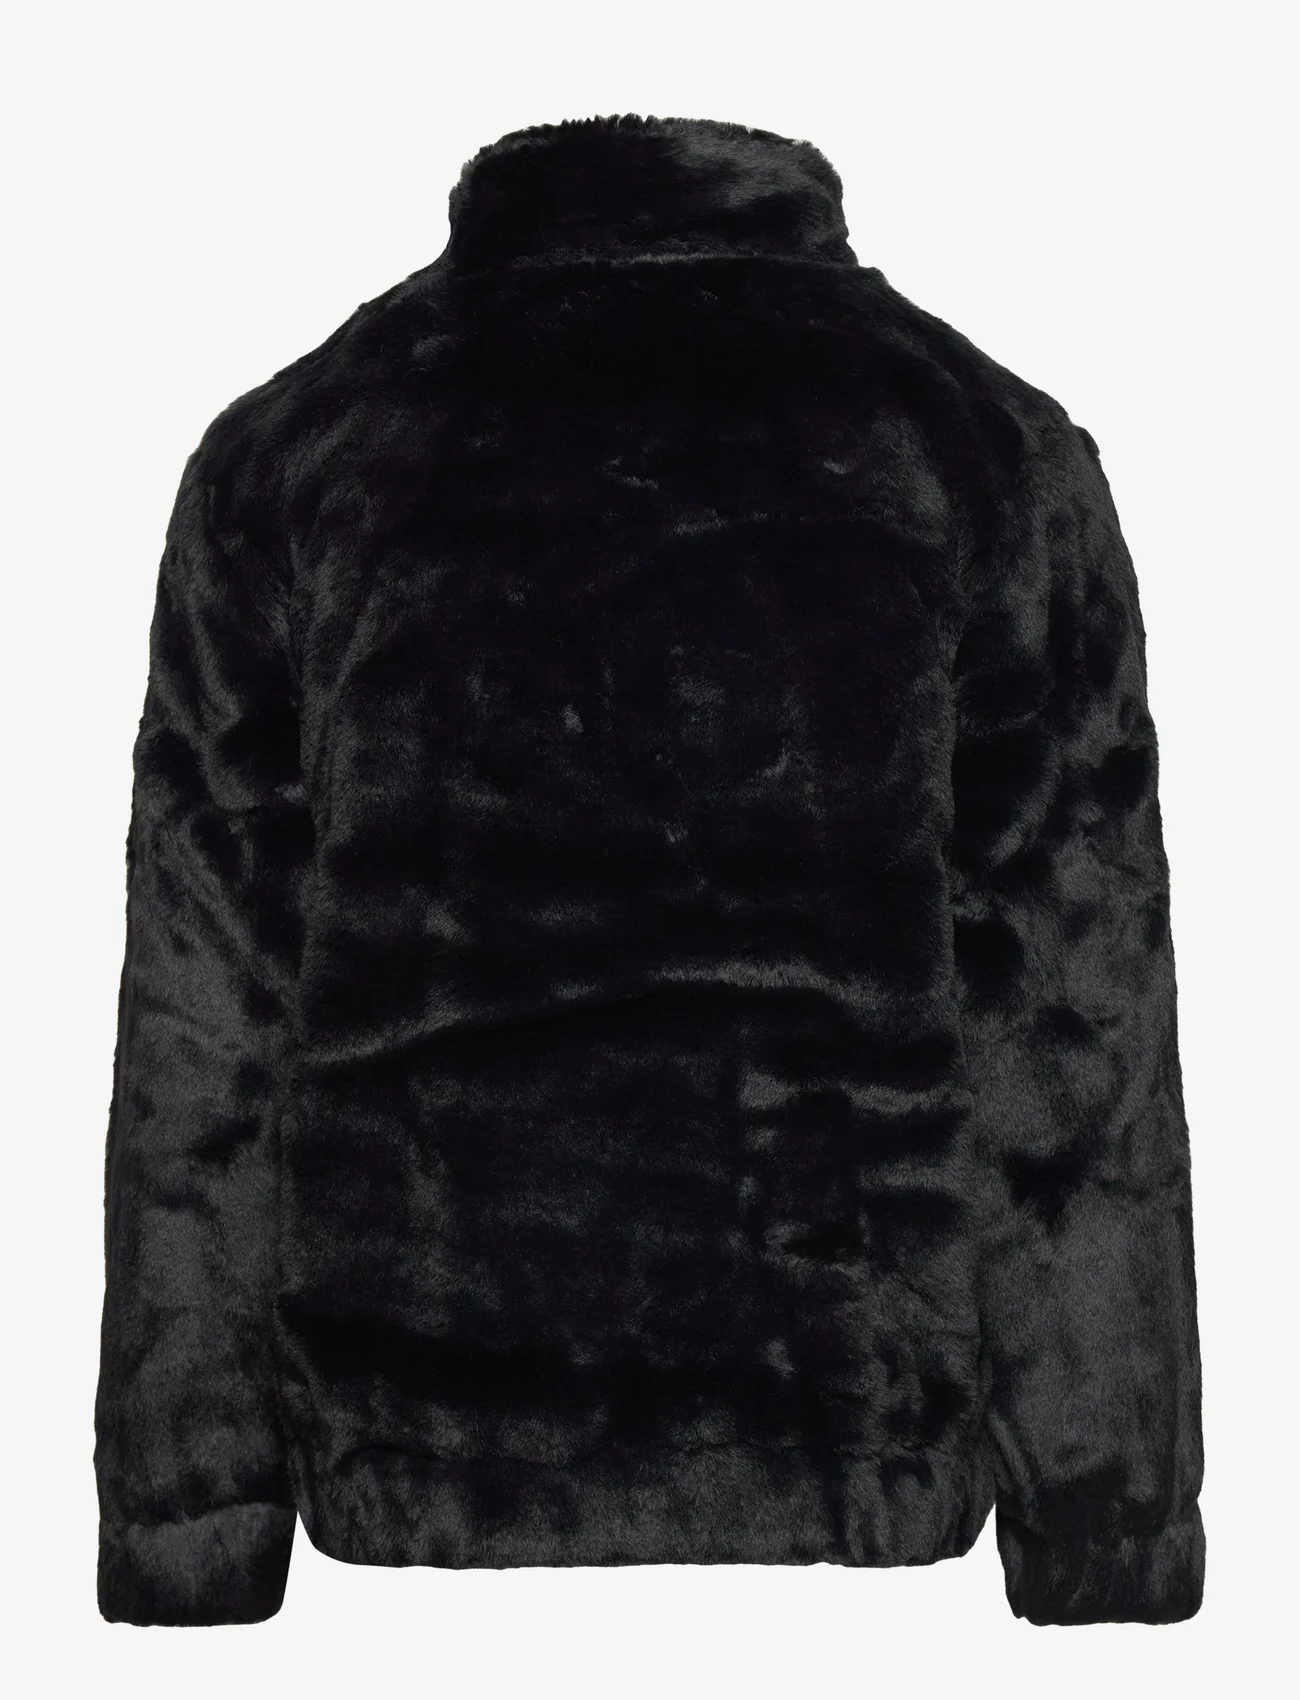 Nike - BIG SWOOSH FAUX FUR JACKET - fleece jacket - black - 1